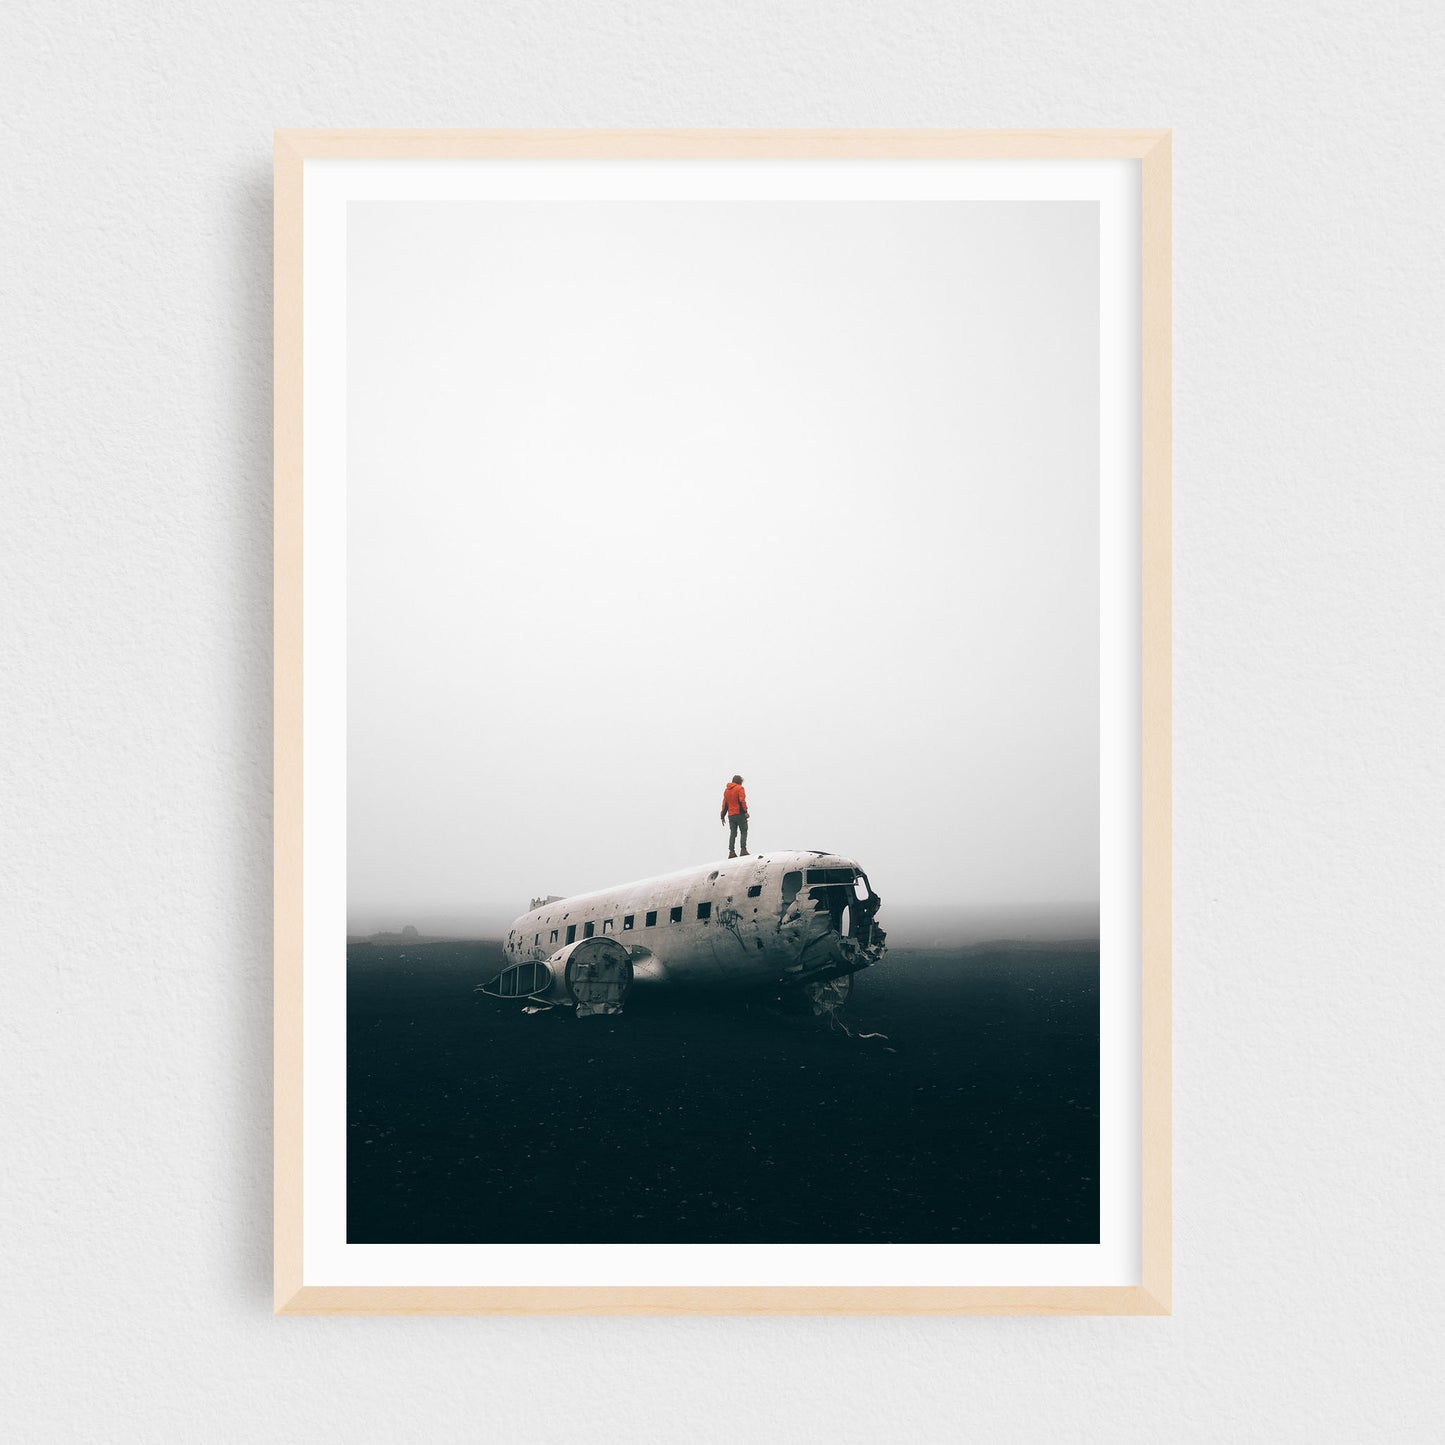 Iceland fine art photography print featuring DC3 plane crash at Solheimasandur, in a maple frame